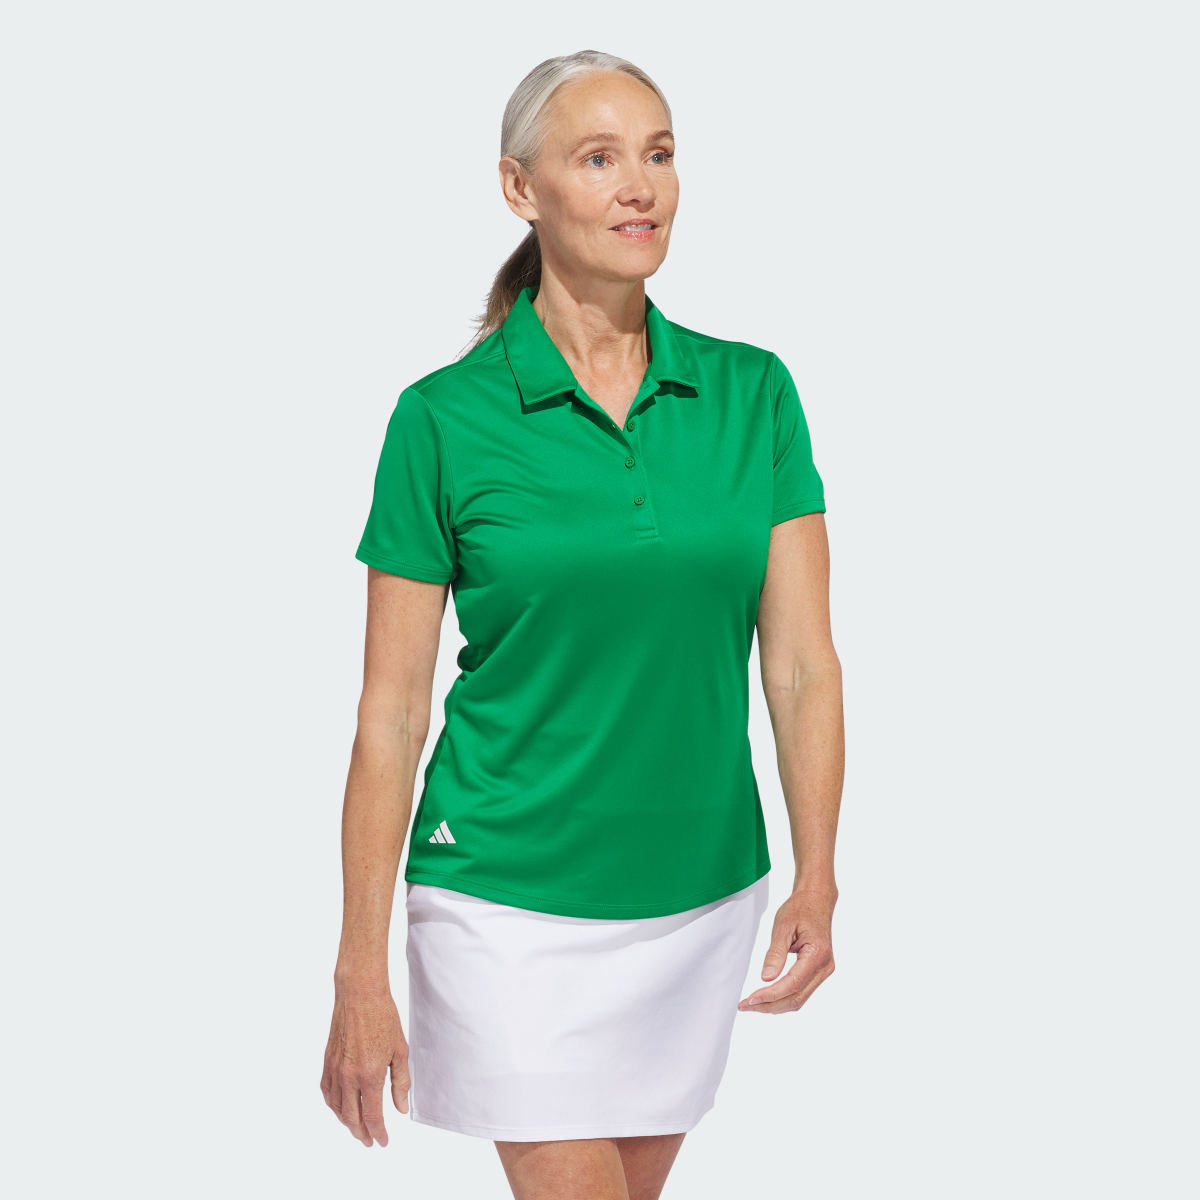 Adidas Women's Solid Performance Short Sleeve Polo Shirt. 4